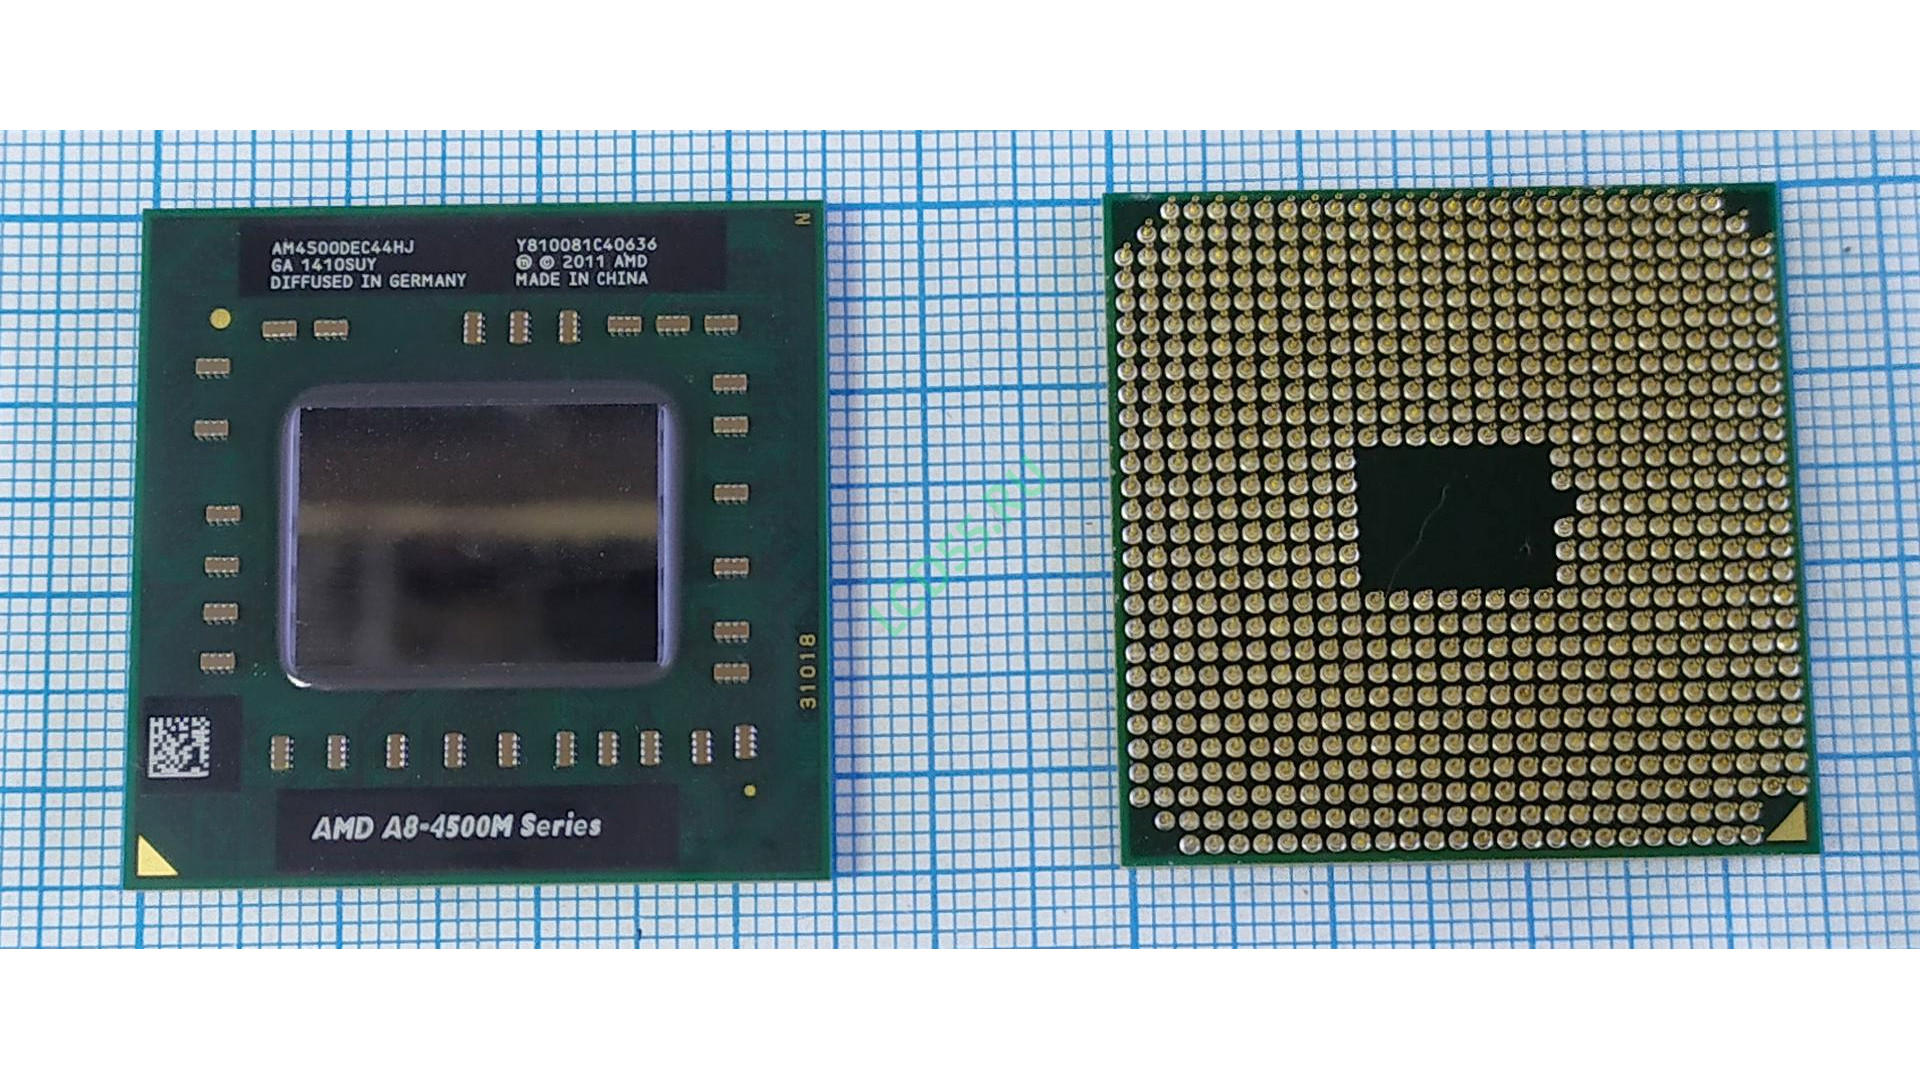 Процессор AMD A8-4500M 1900 MHz AM4500DEC44HJ Socket FS1r2